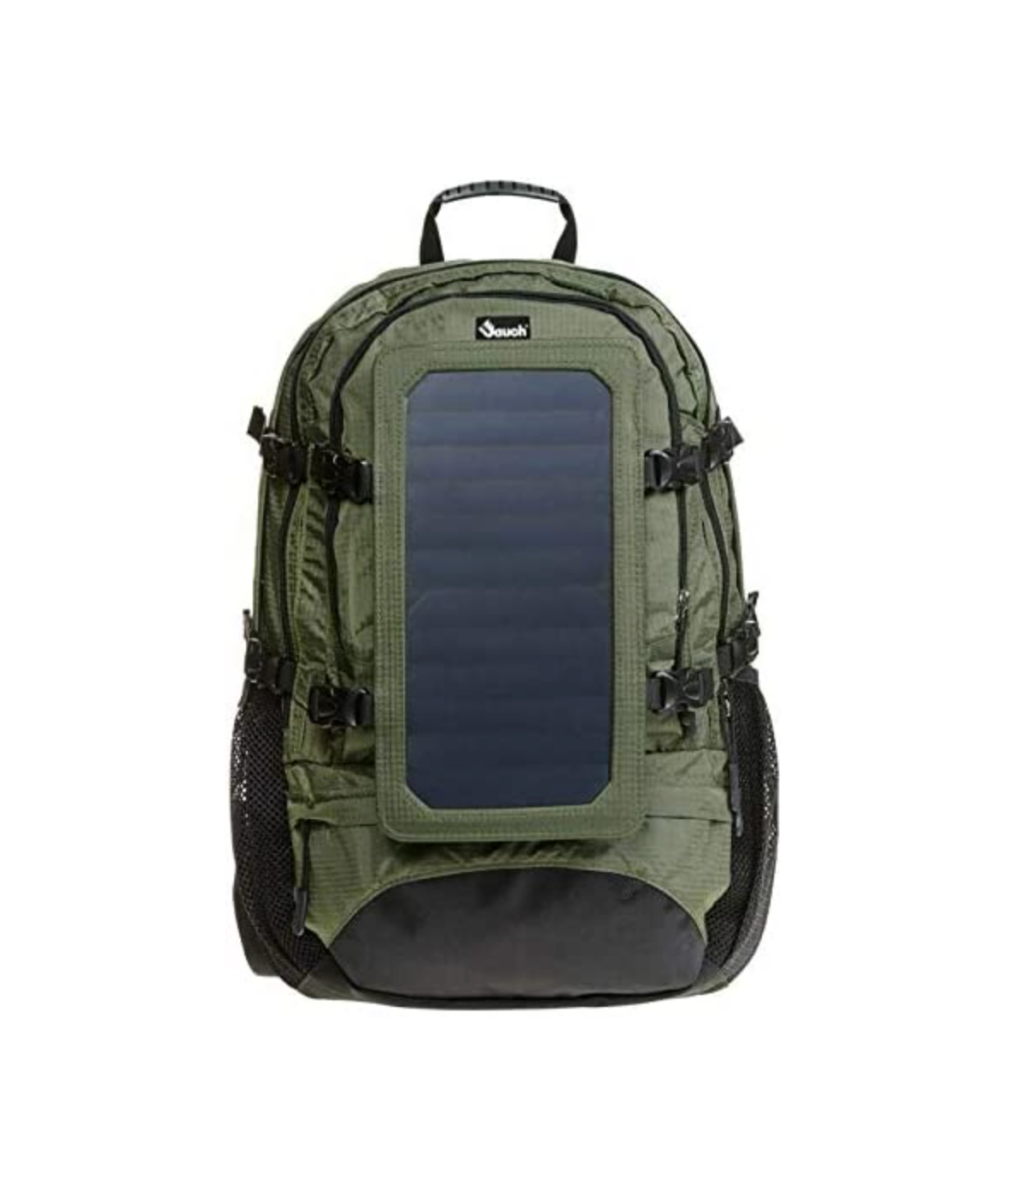 A Jaunch XTPower Backpack